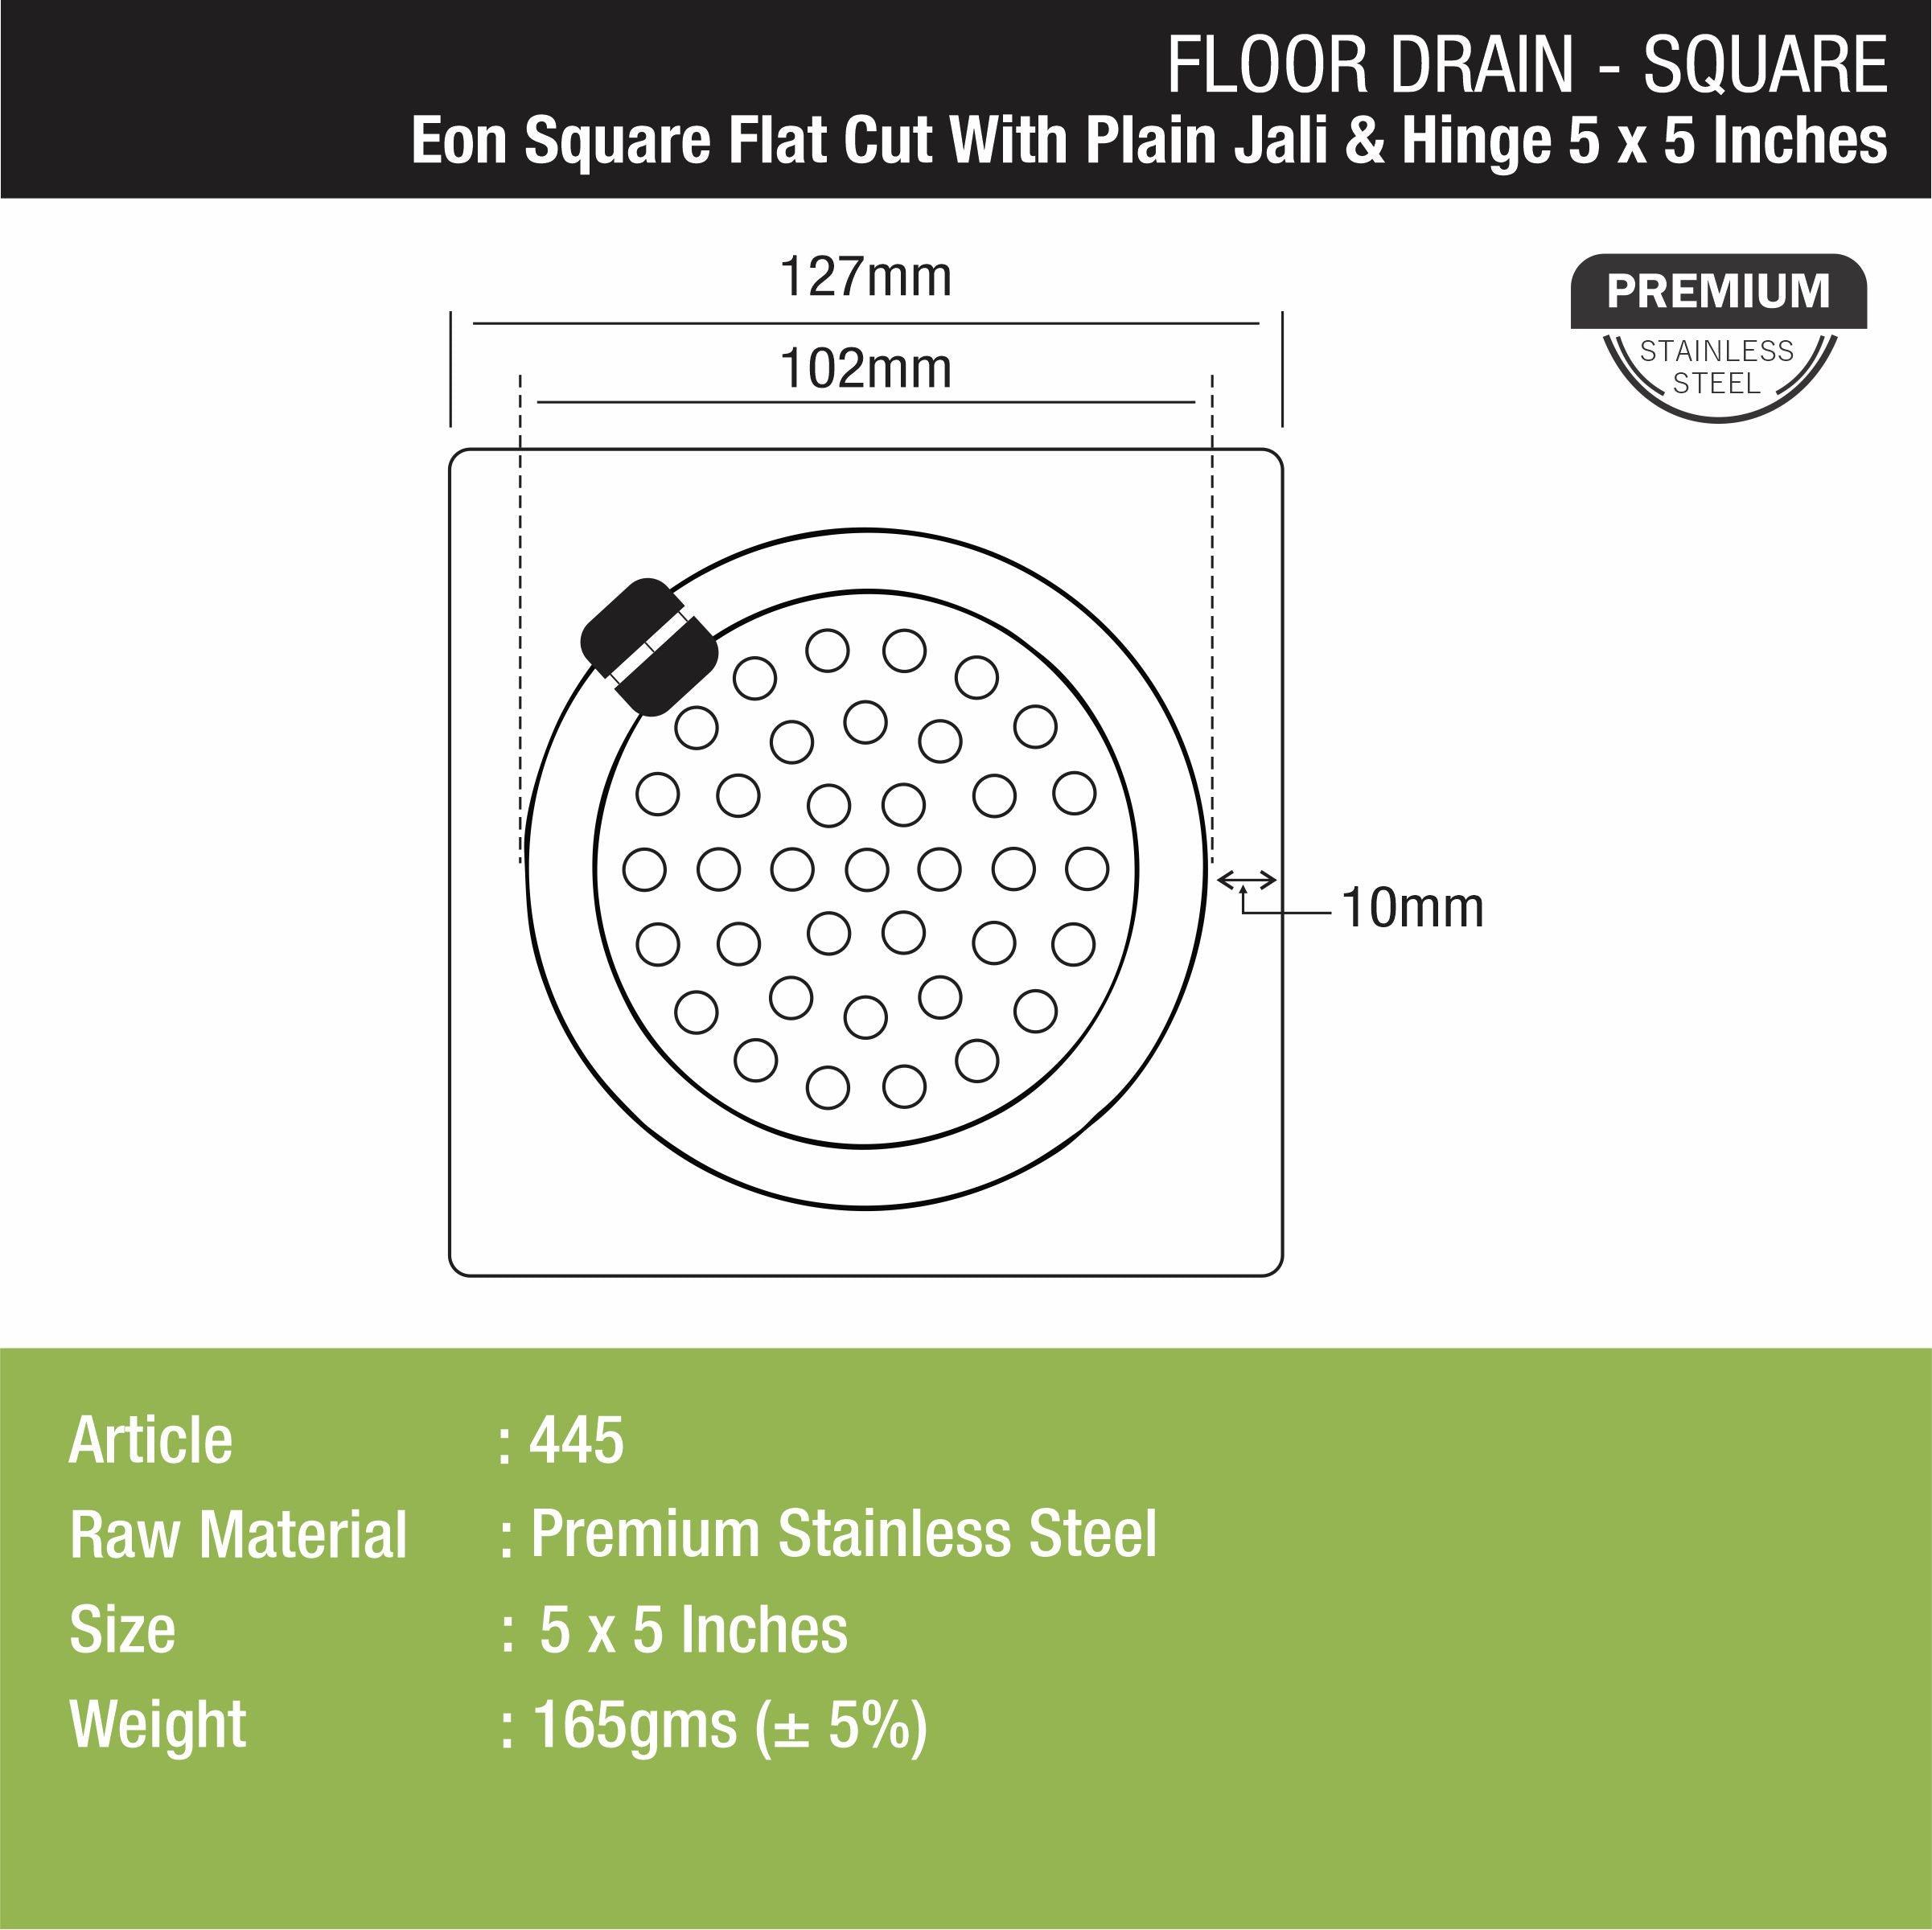 Eon Square Flat Cut Floor Drain with Plain Jali and Hinge (5 x 5 Inches) - LIPKA